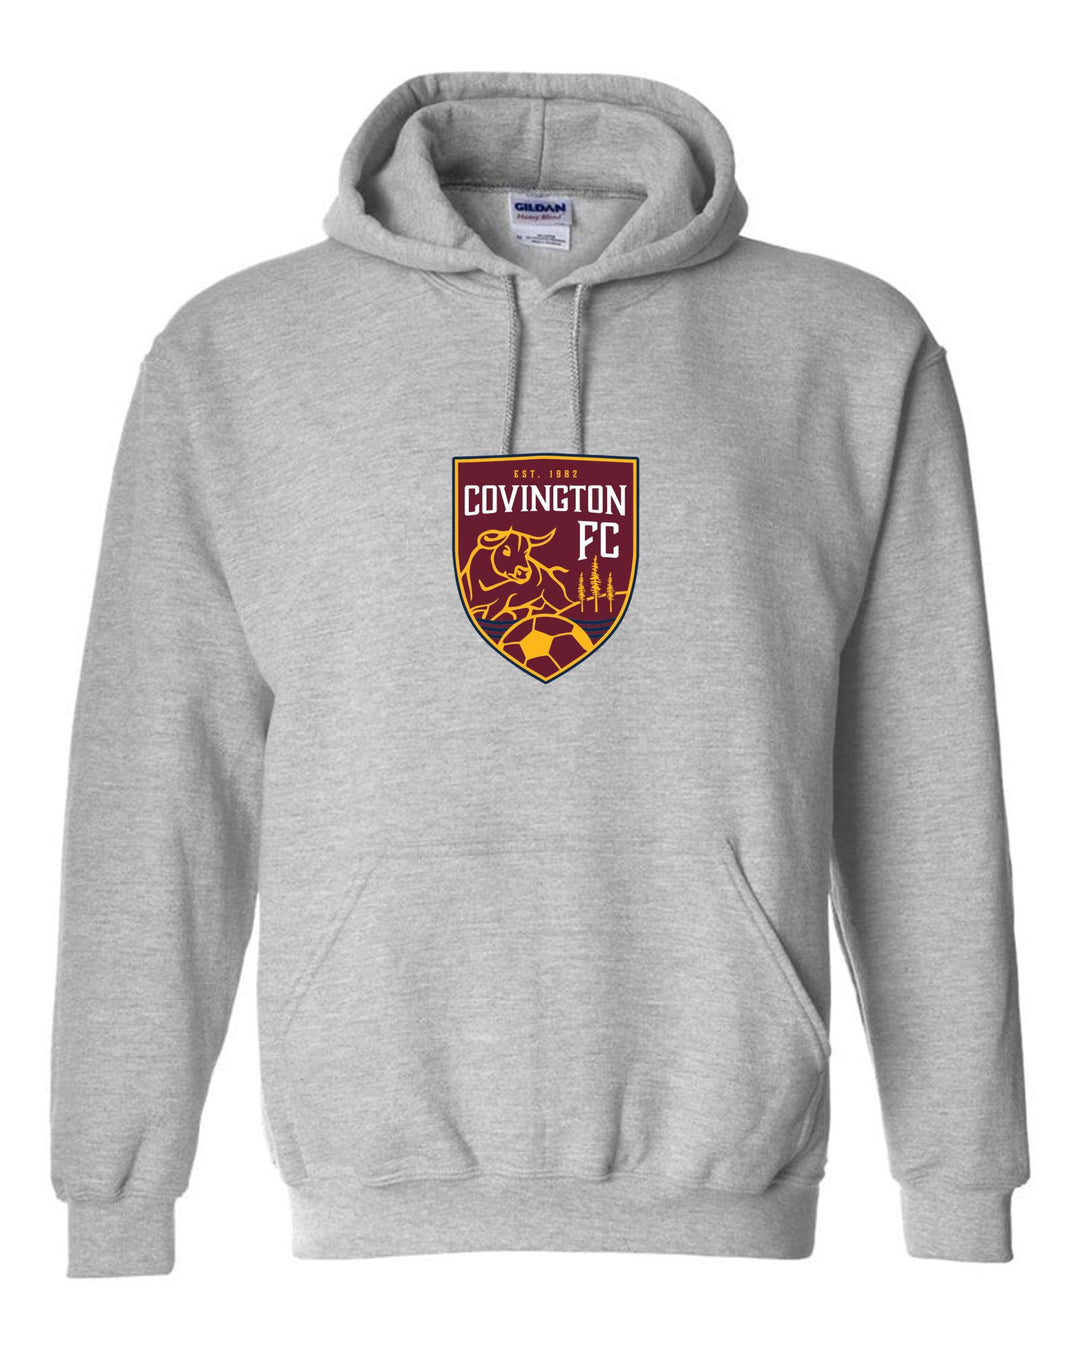 CYSA Hooded Sweatshirt - Navy, Gold or Grey CYSA Spiritwear NAVY MENS LARGE - Third Coast Soccer